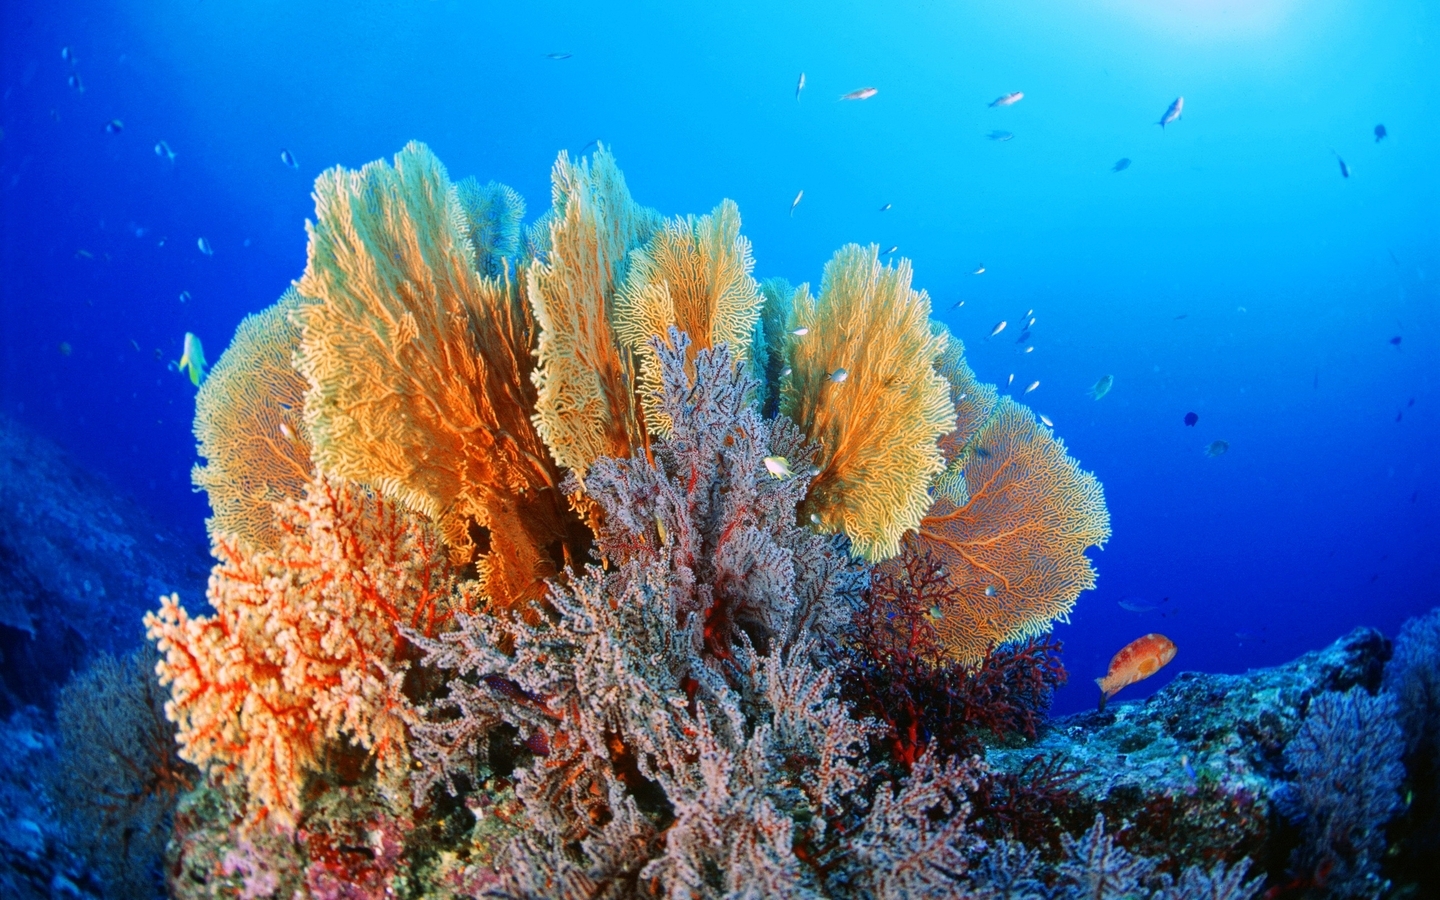 Image: Corals, fish, bottom, water